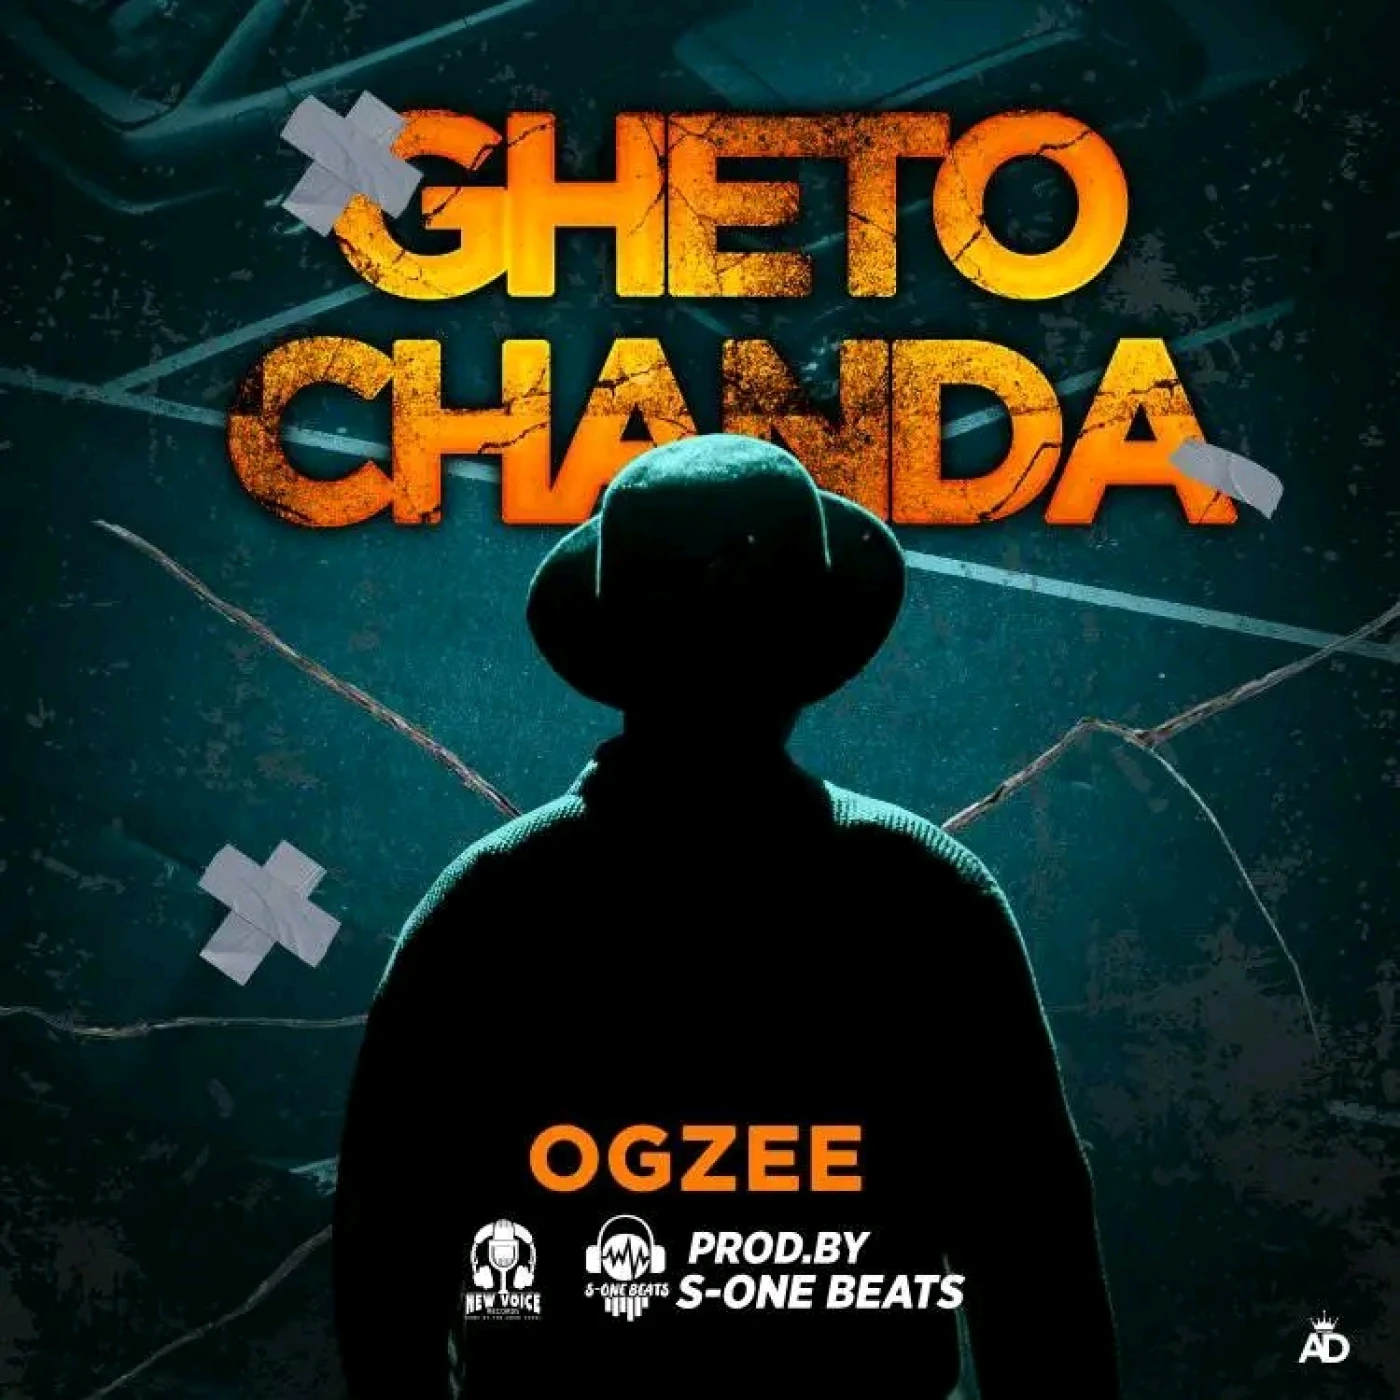 ogzee-ghetto-chanda-ogzee